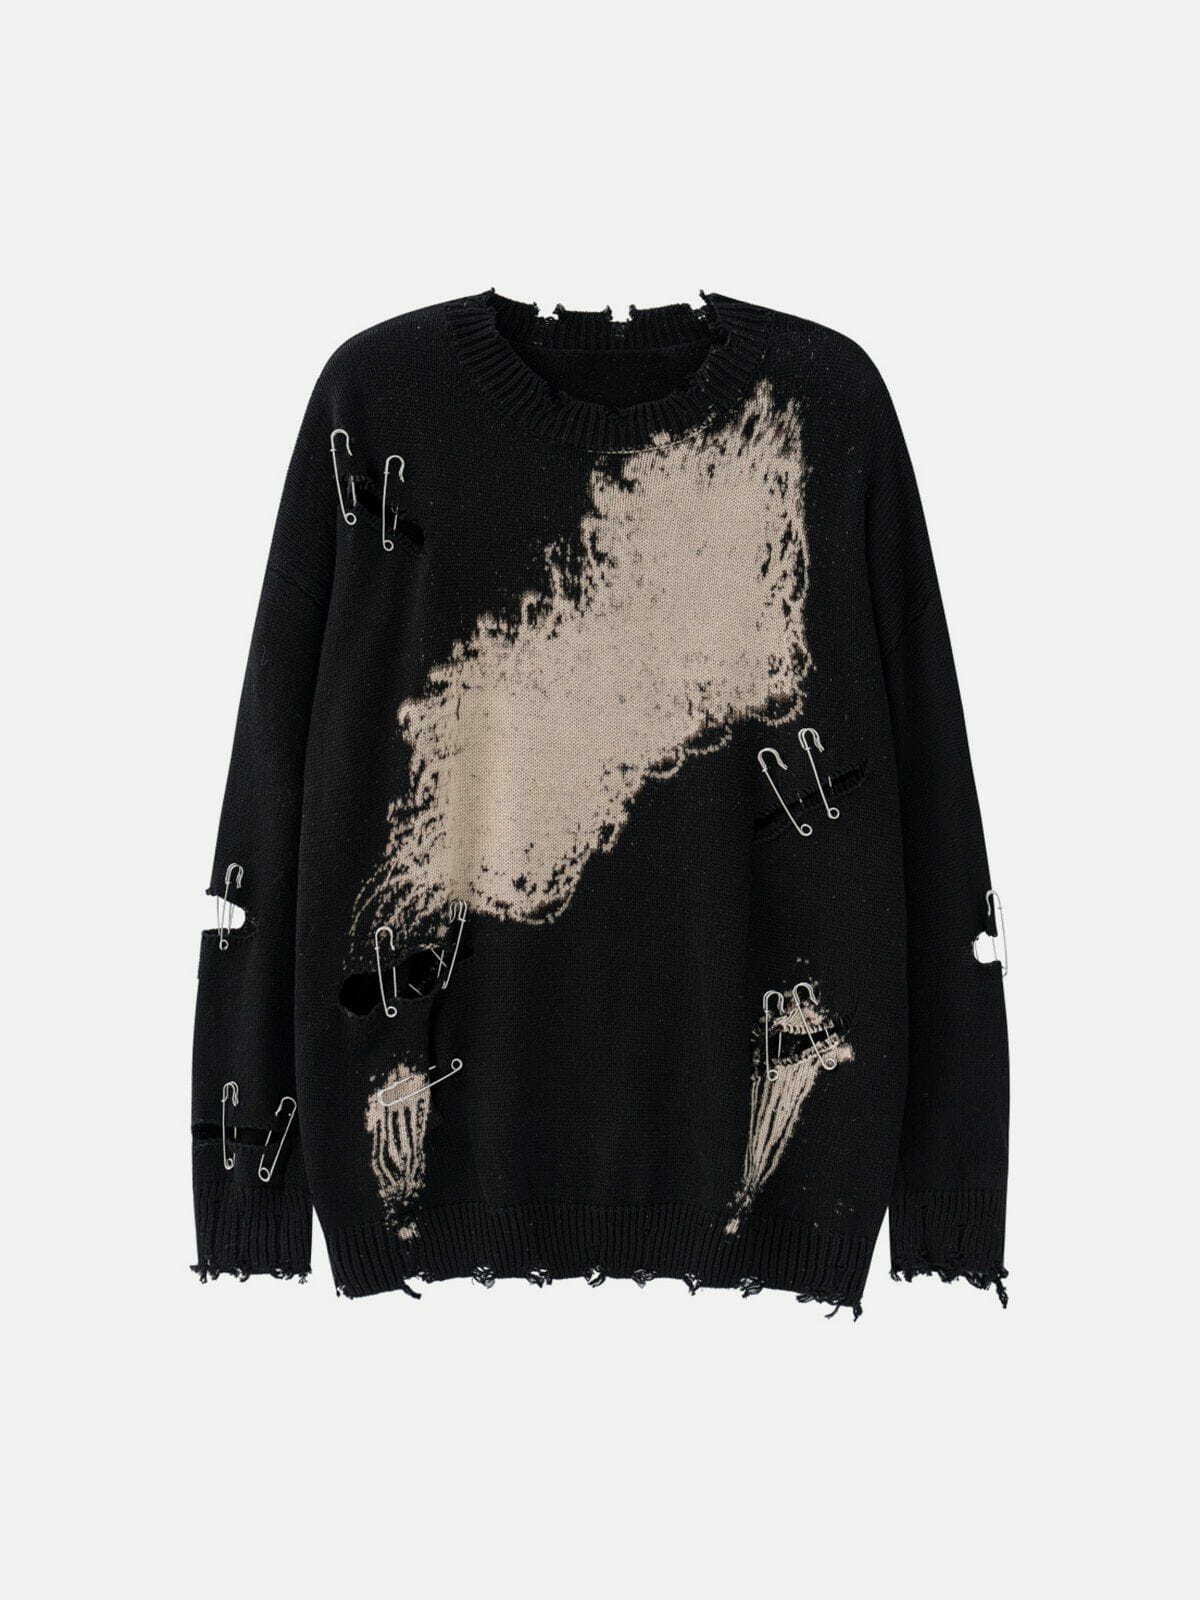 knit sweater with broken design edgy y2k streetwear 8706